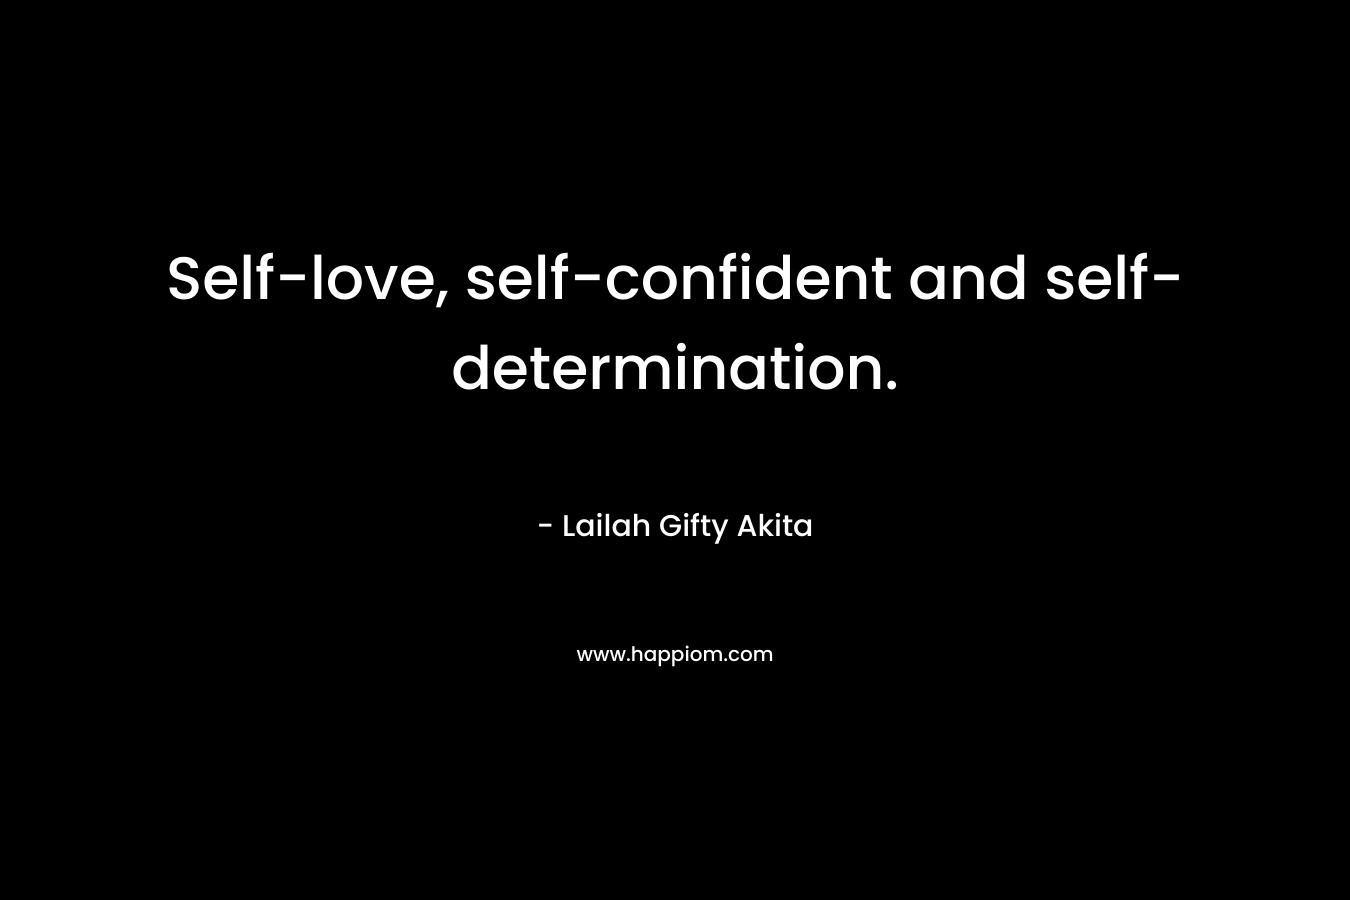 Self-love, self-confident and self-determination.